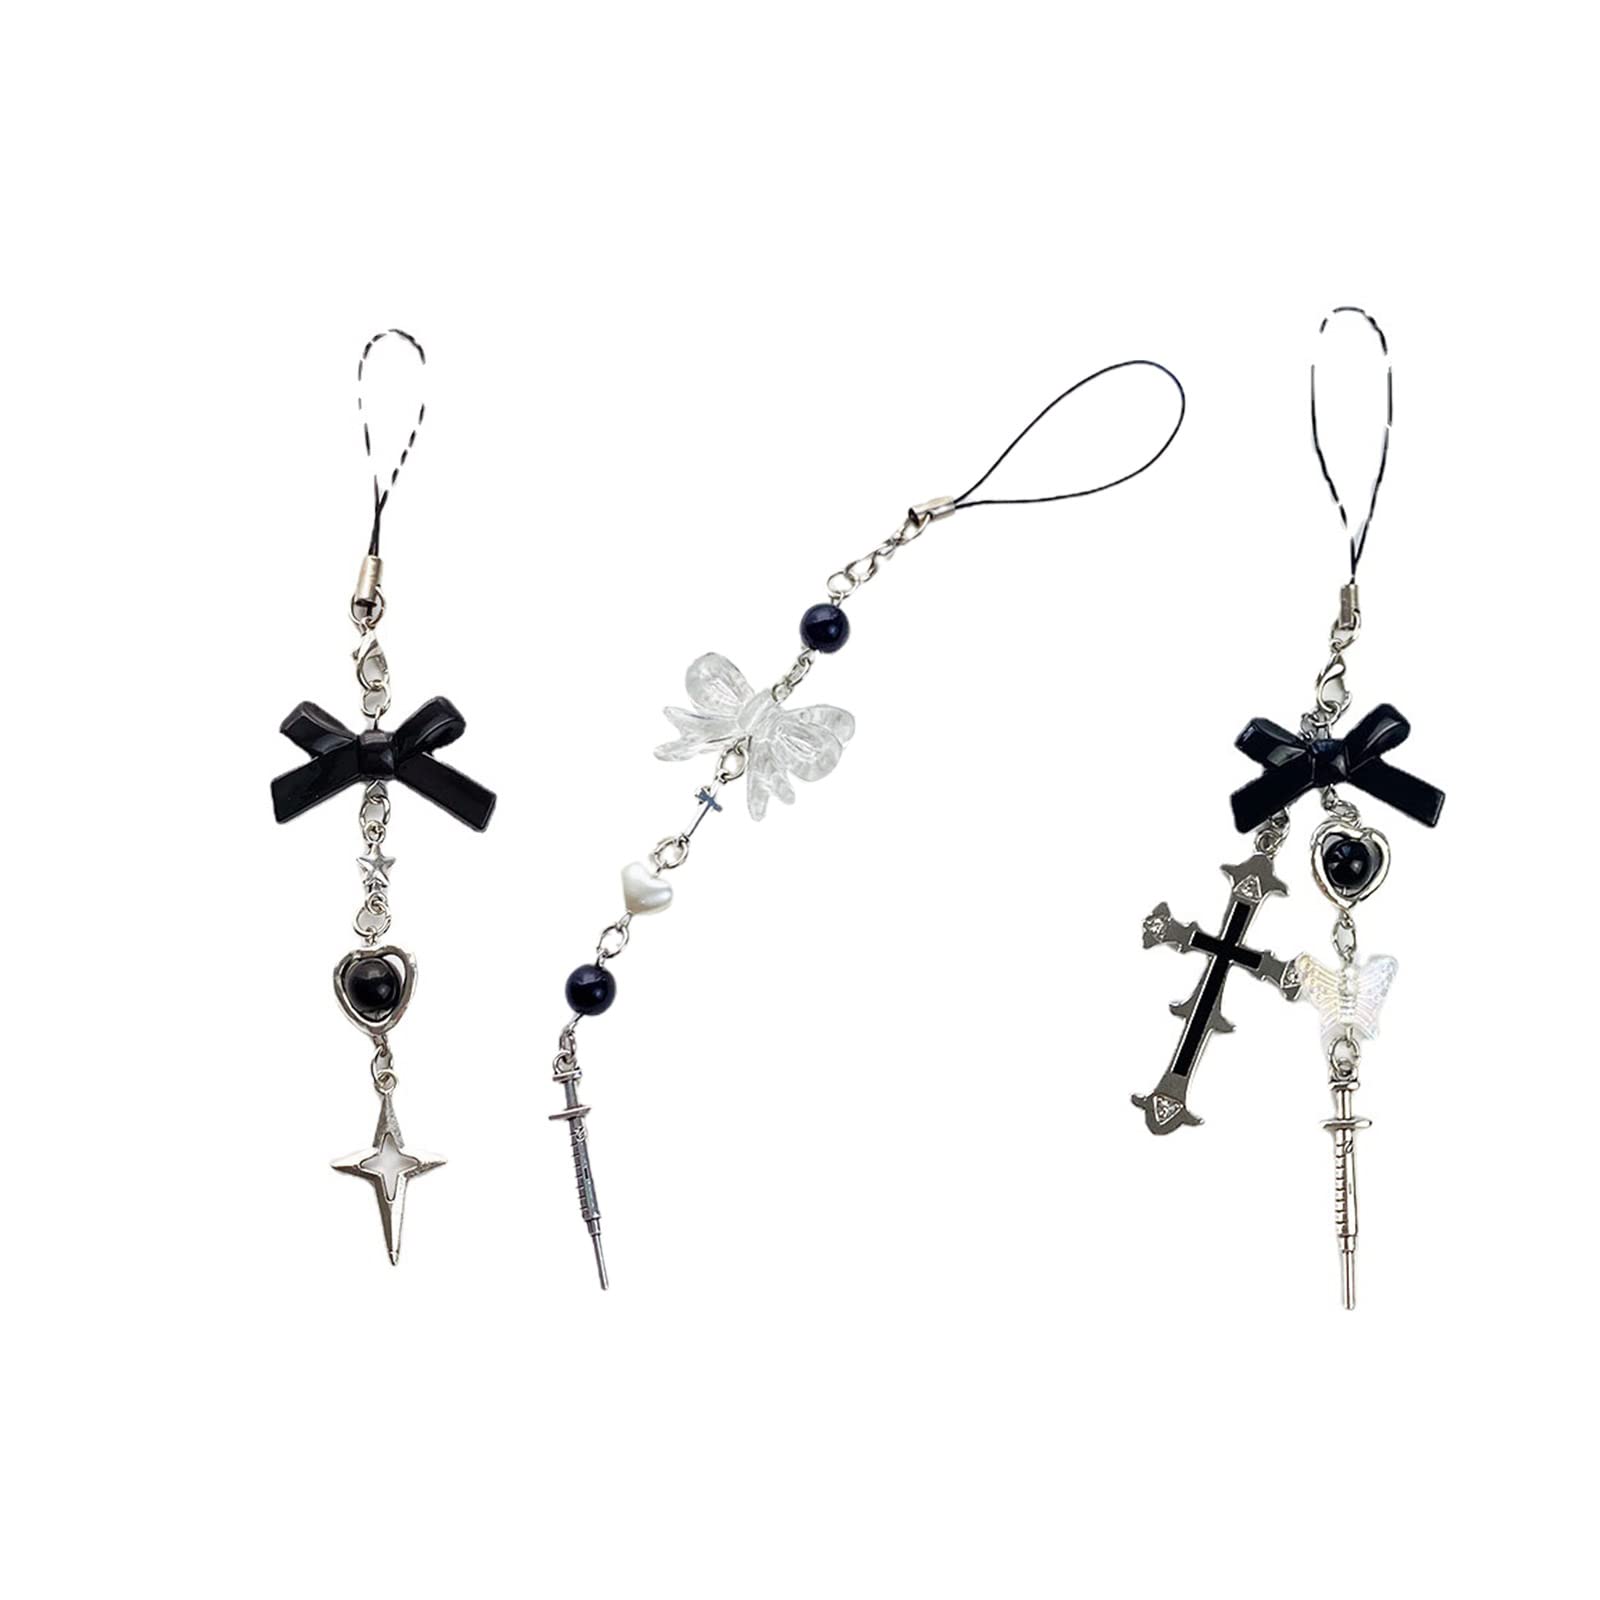 hejhncii Phone Charm Strap Keychain Kawaii-Cute Keychain Lanyard String Black Cross-Bow Beaded Chain Lanyard Y2K